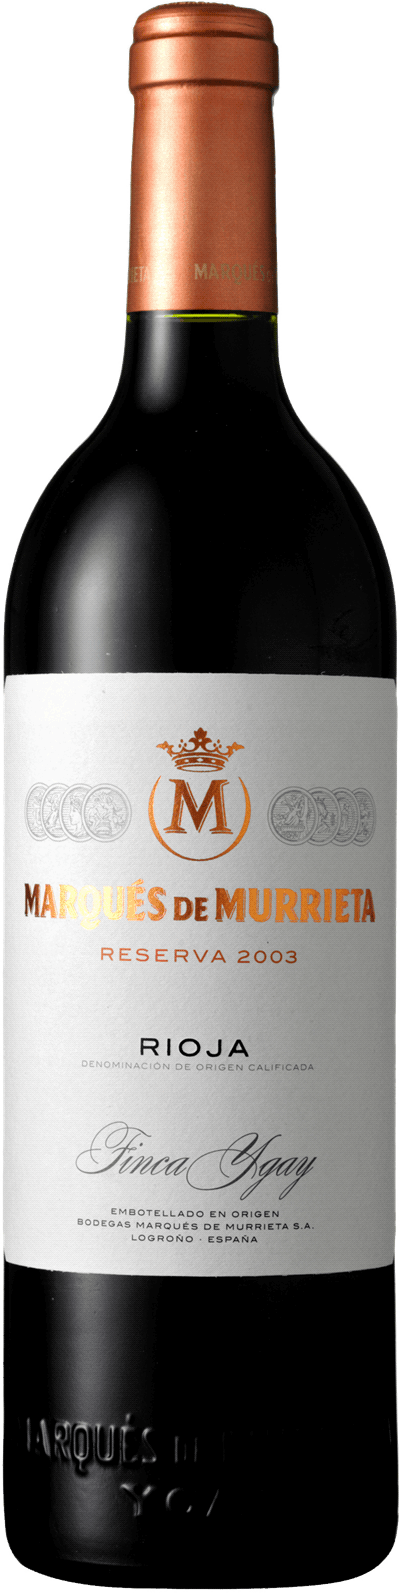 Produktbild för Marqués de Murrieta